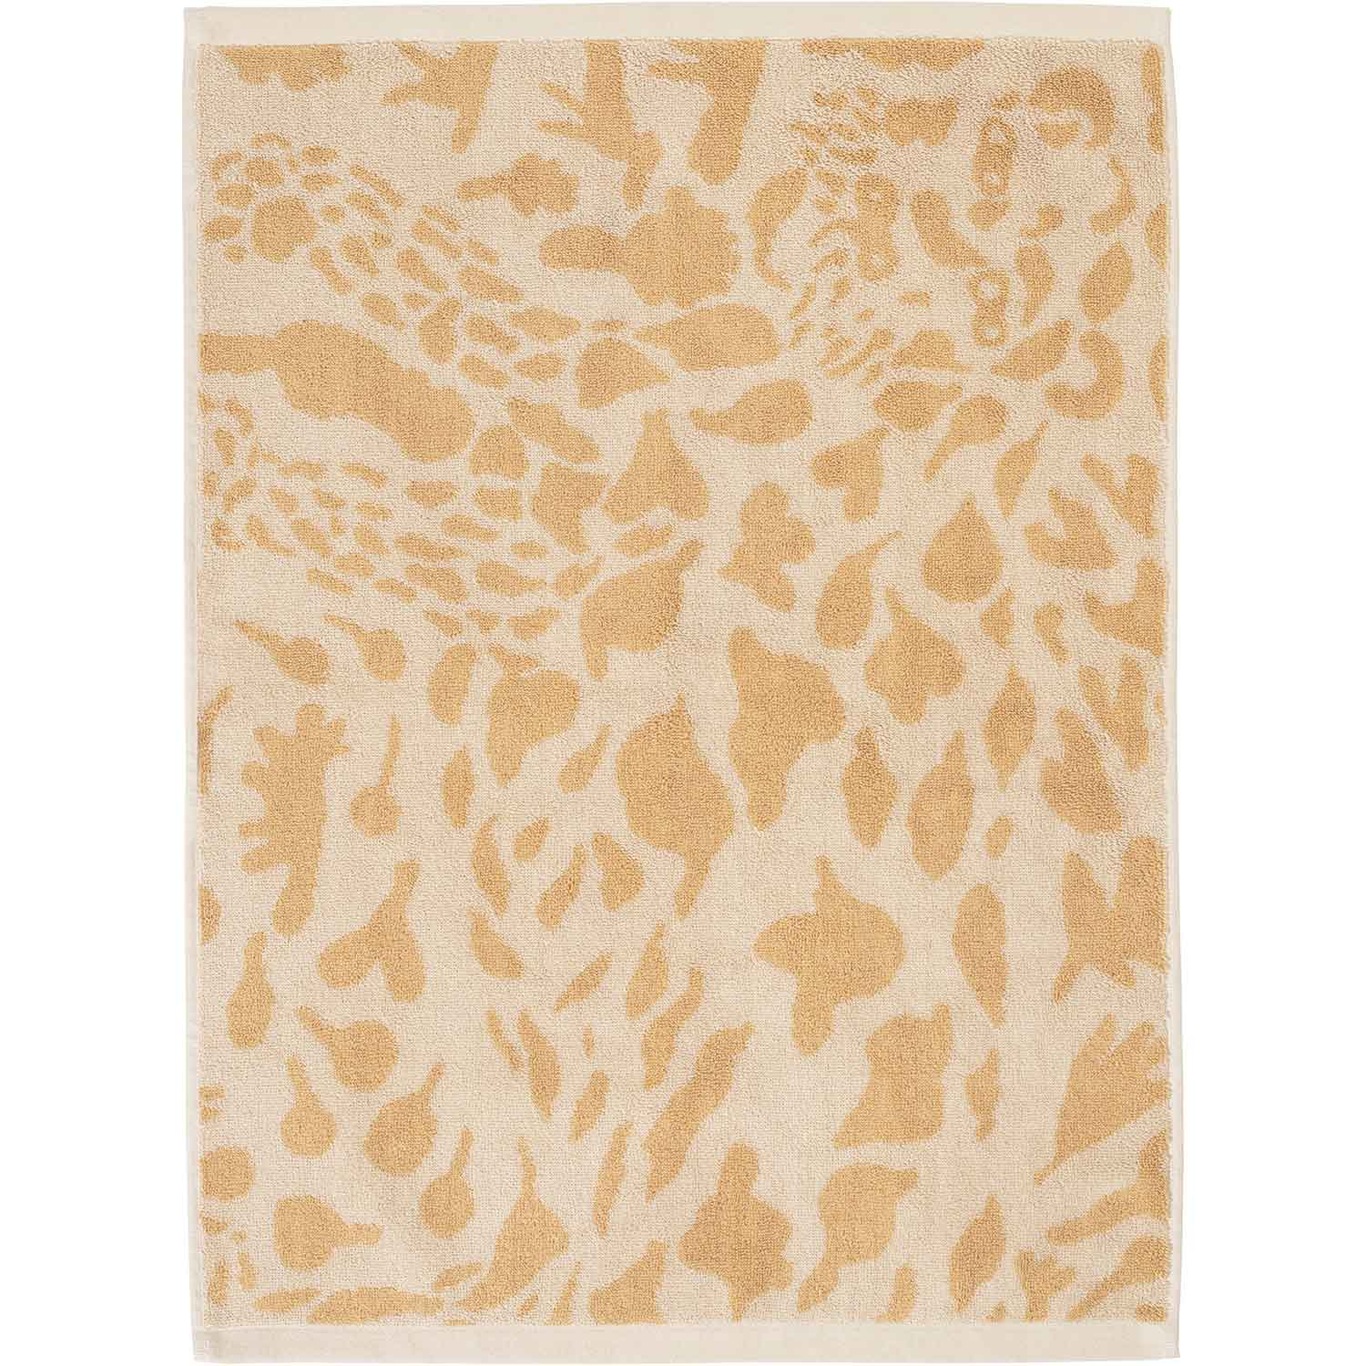 Oiva Toikka Collection Pyyhe, 50x70 cm, Cheetah Brown